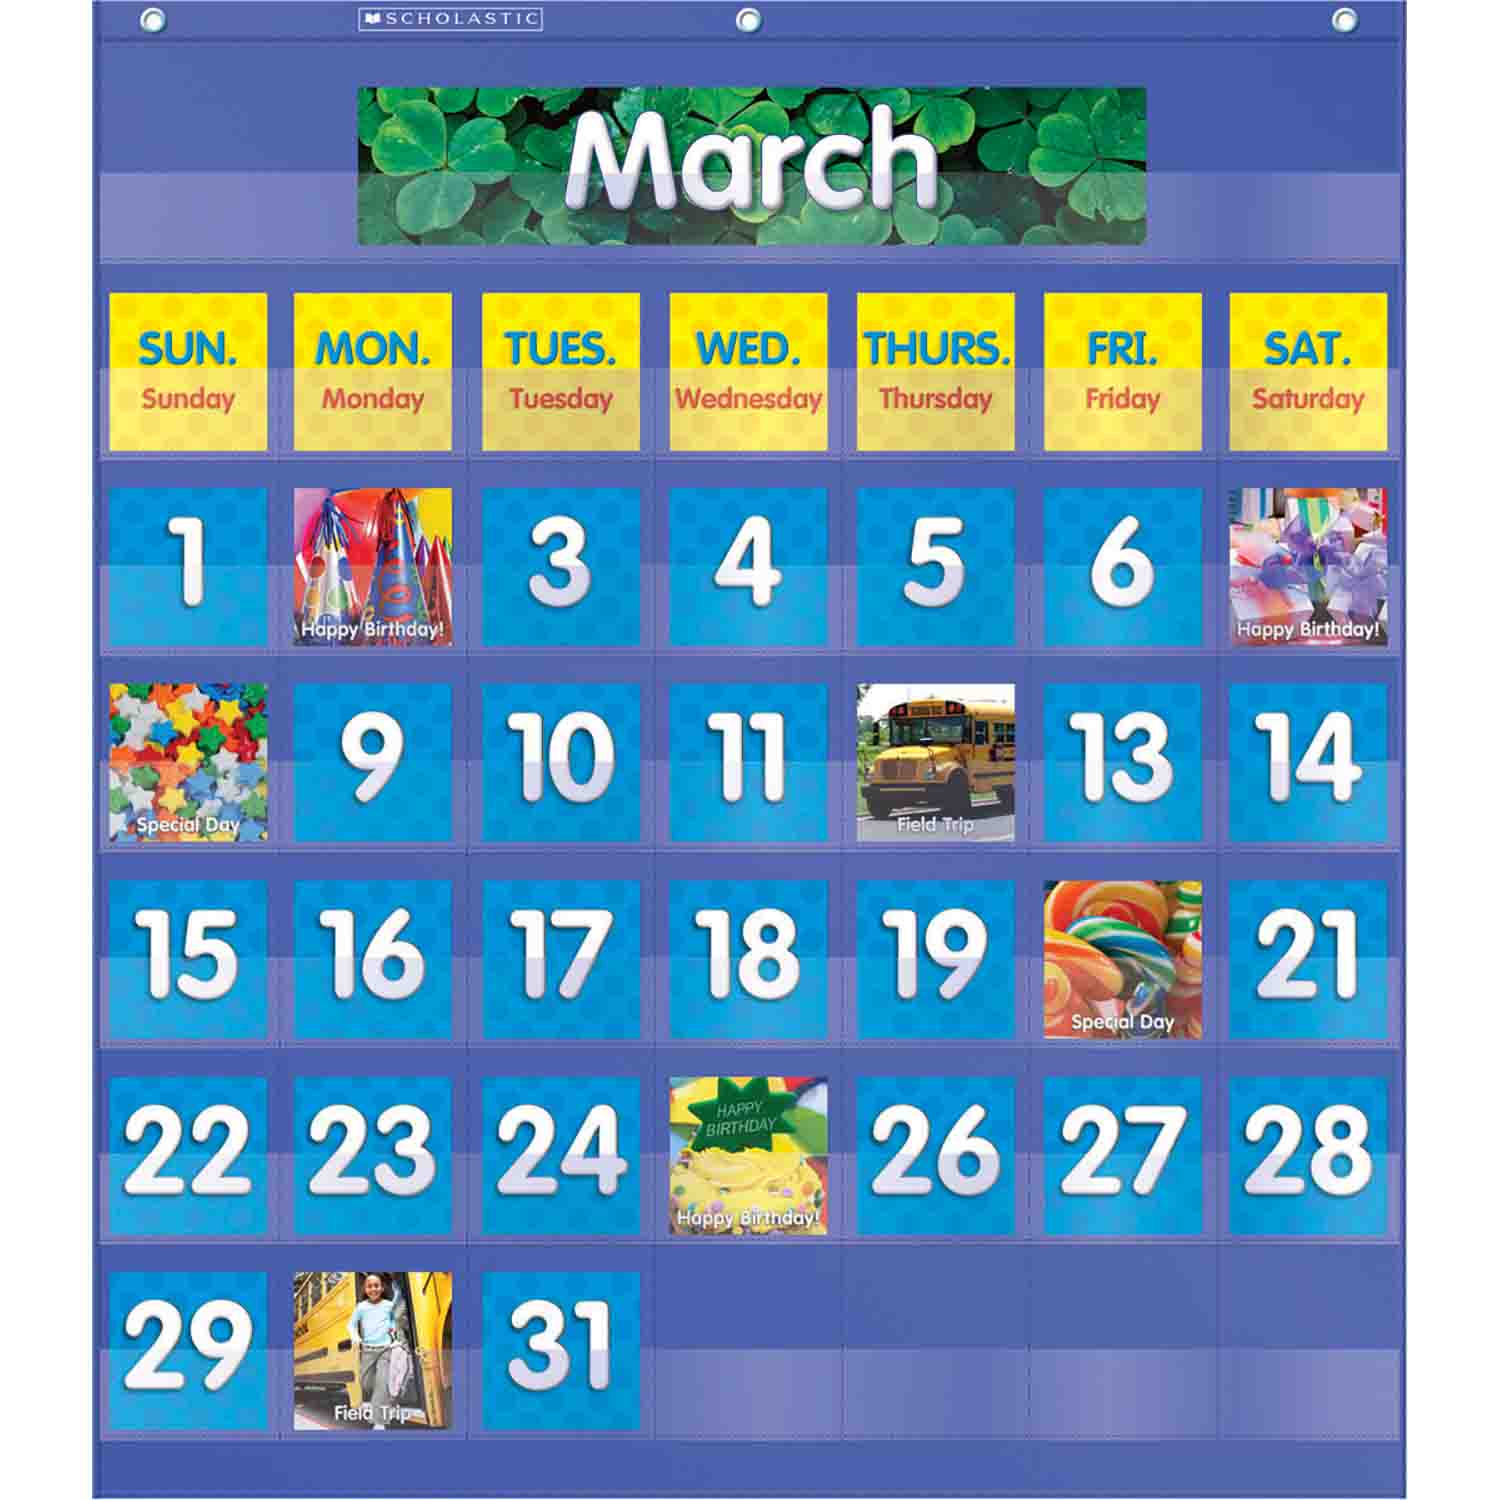 Calendar Cards For Pocket Chart